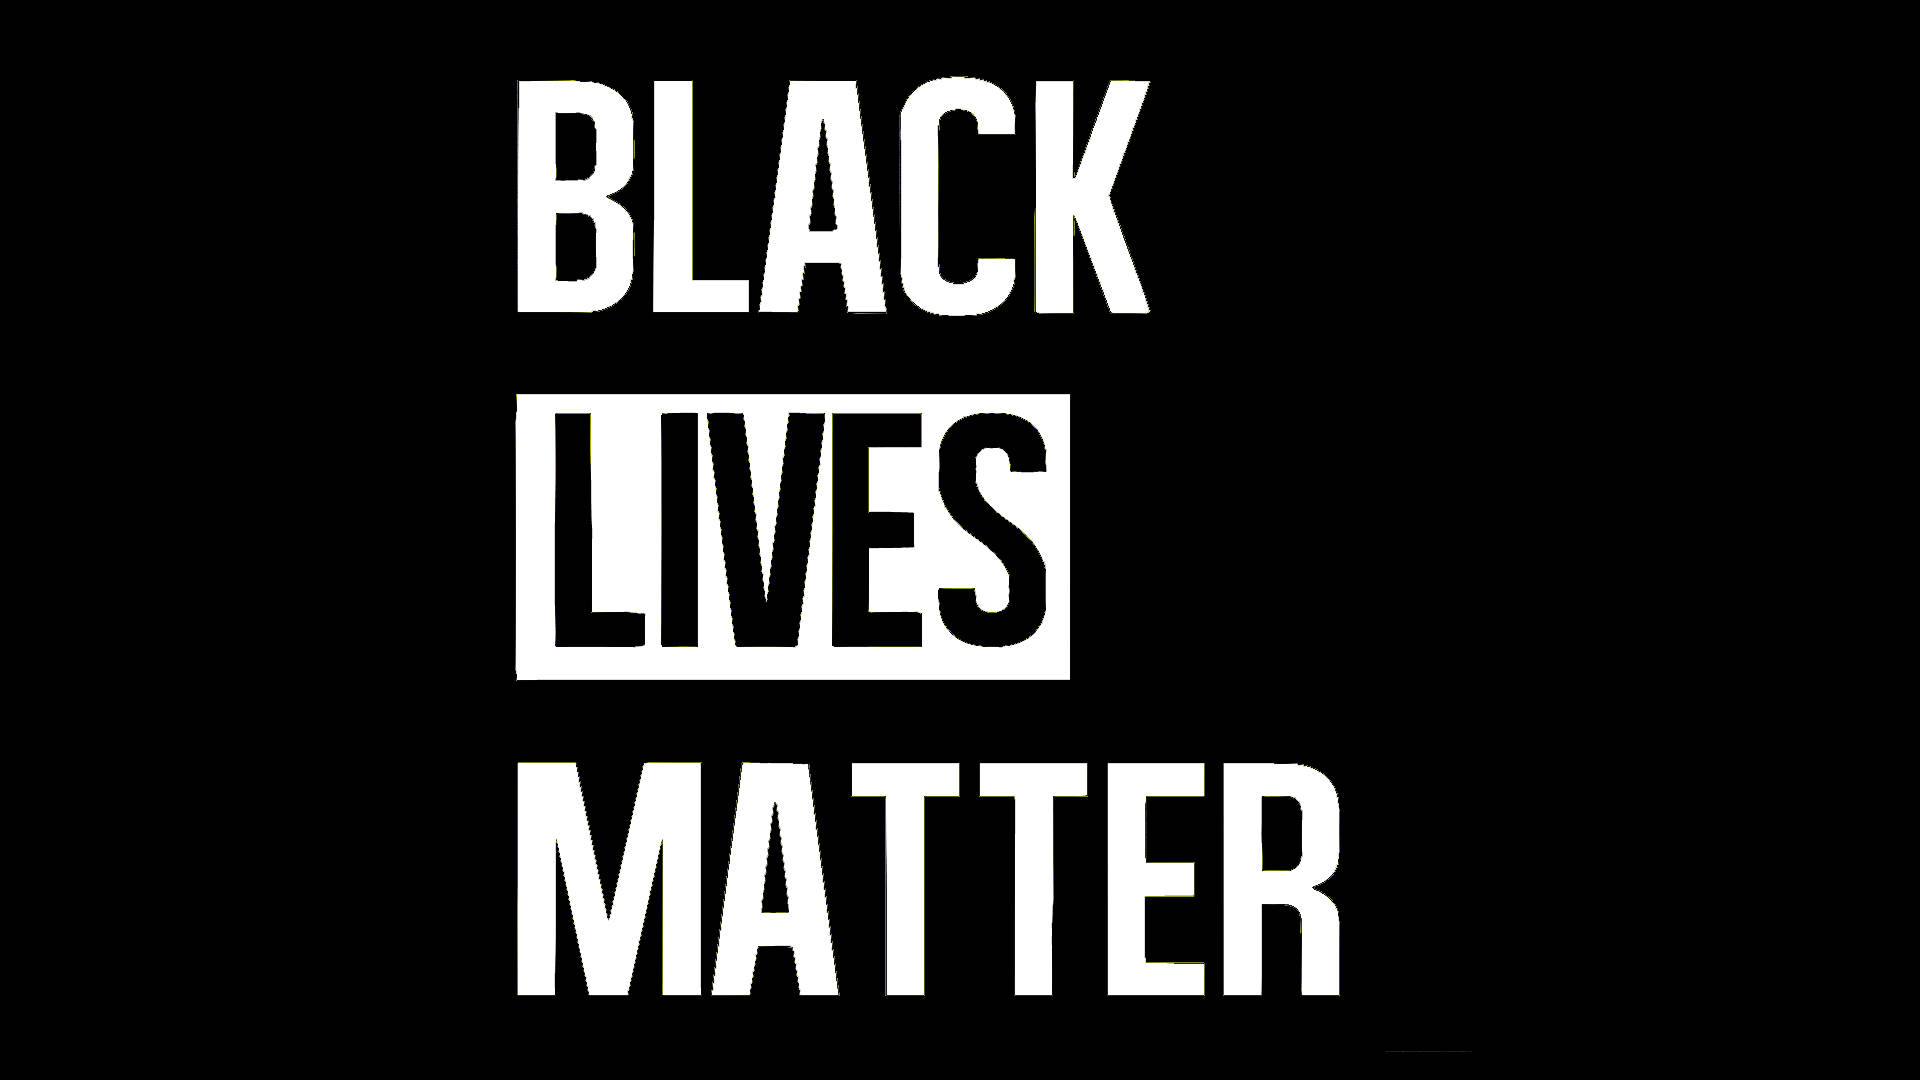 Simple Black Lives Matter Poster Wallpaper